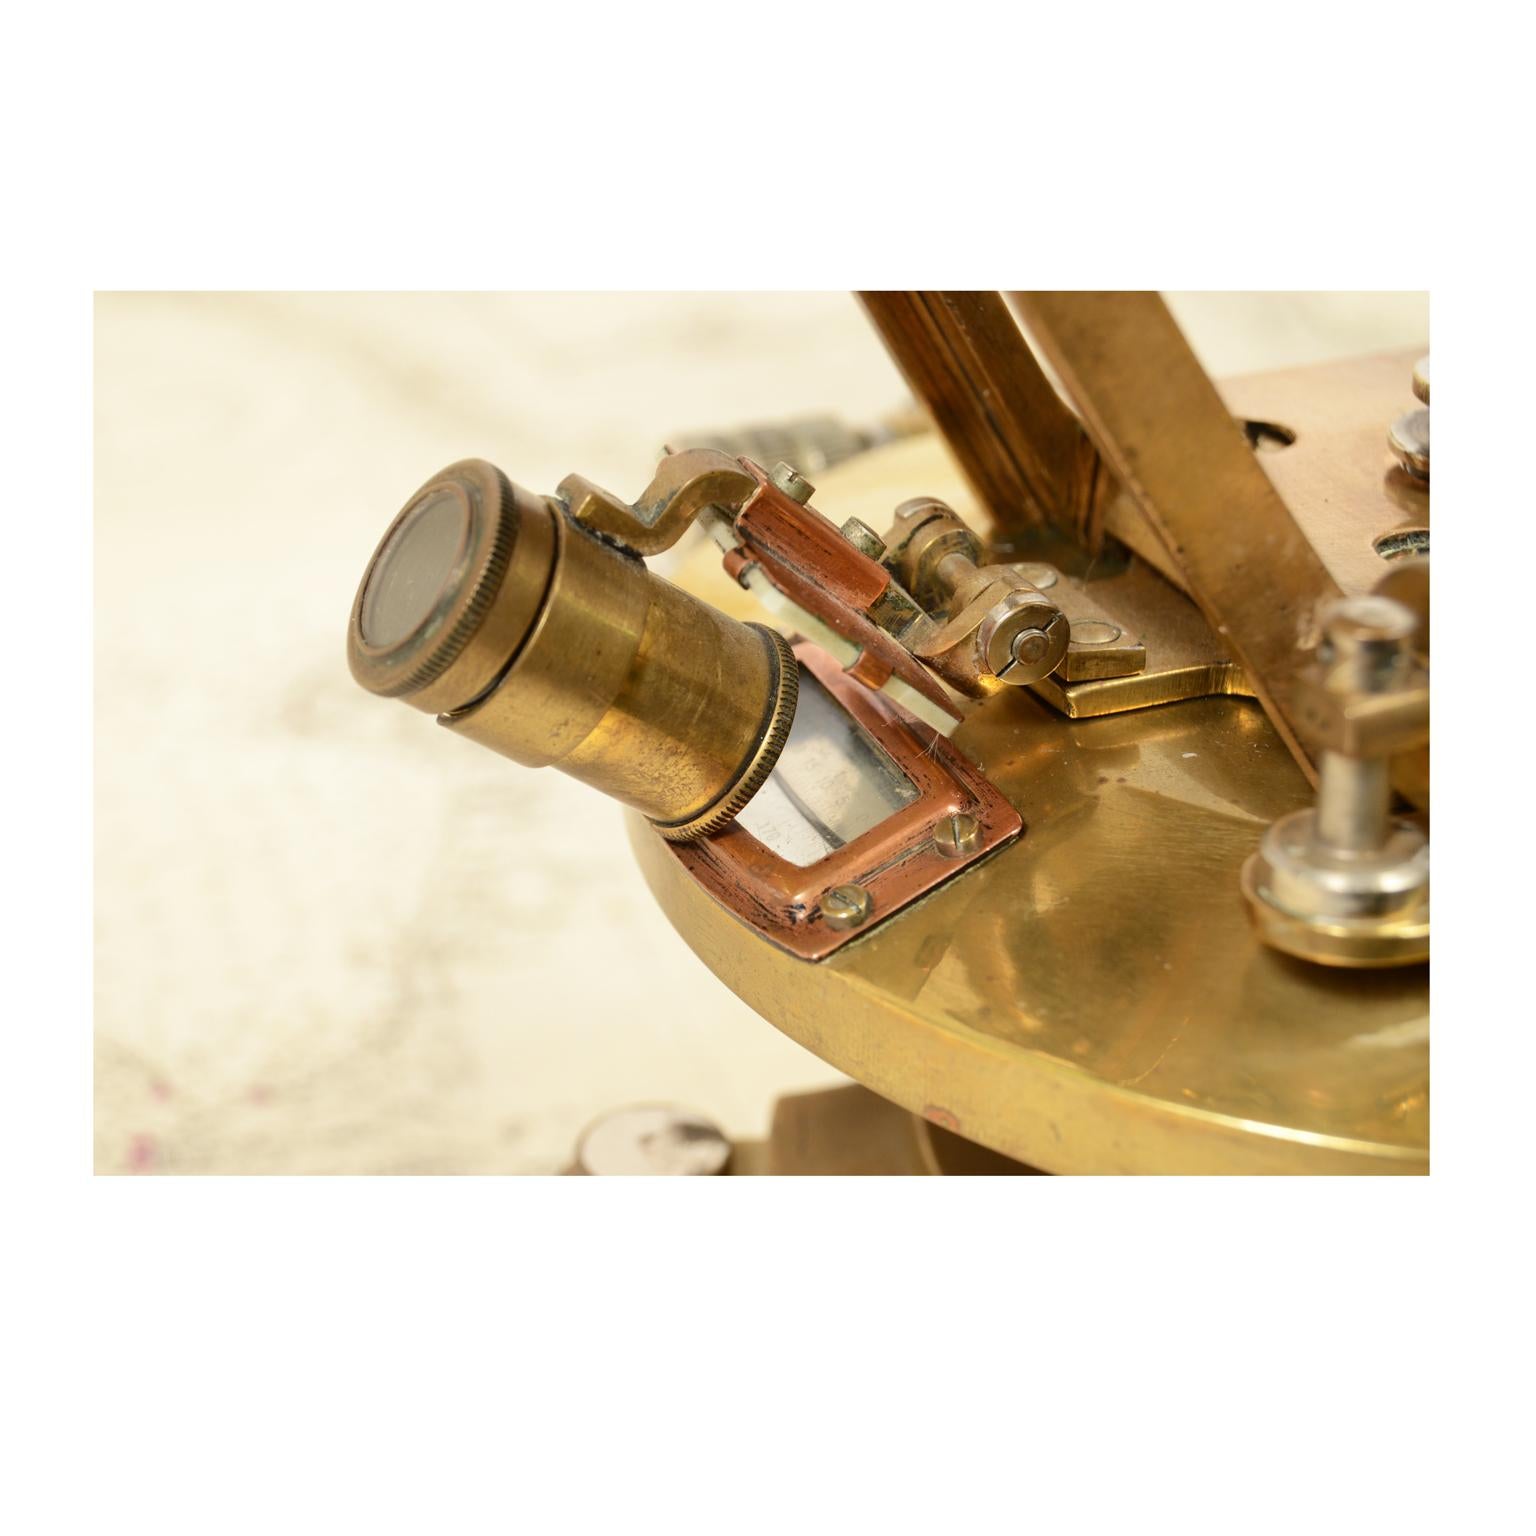 1900s English Antique Brass Tacheometer, surveying instrument 5